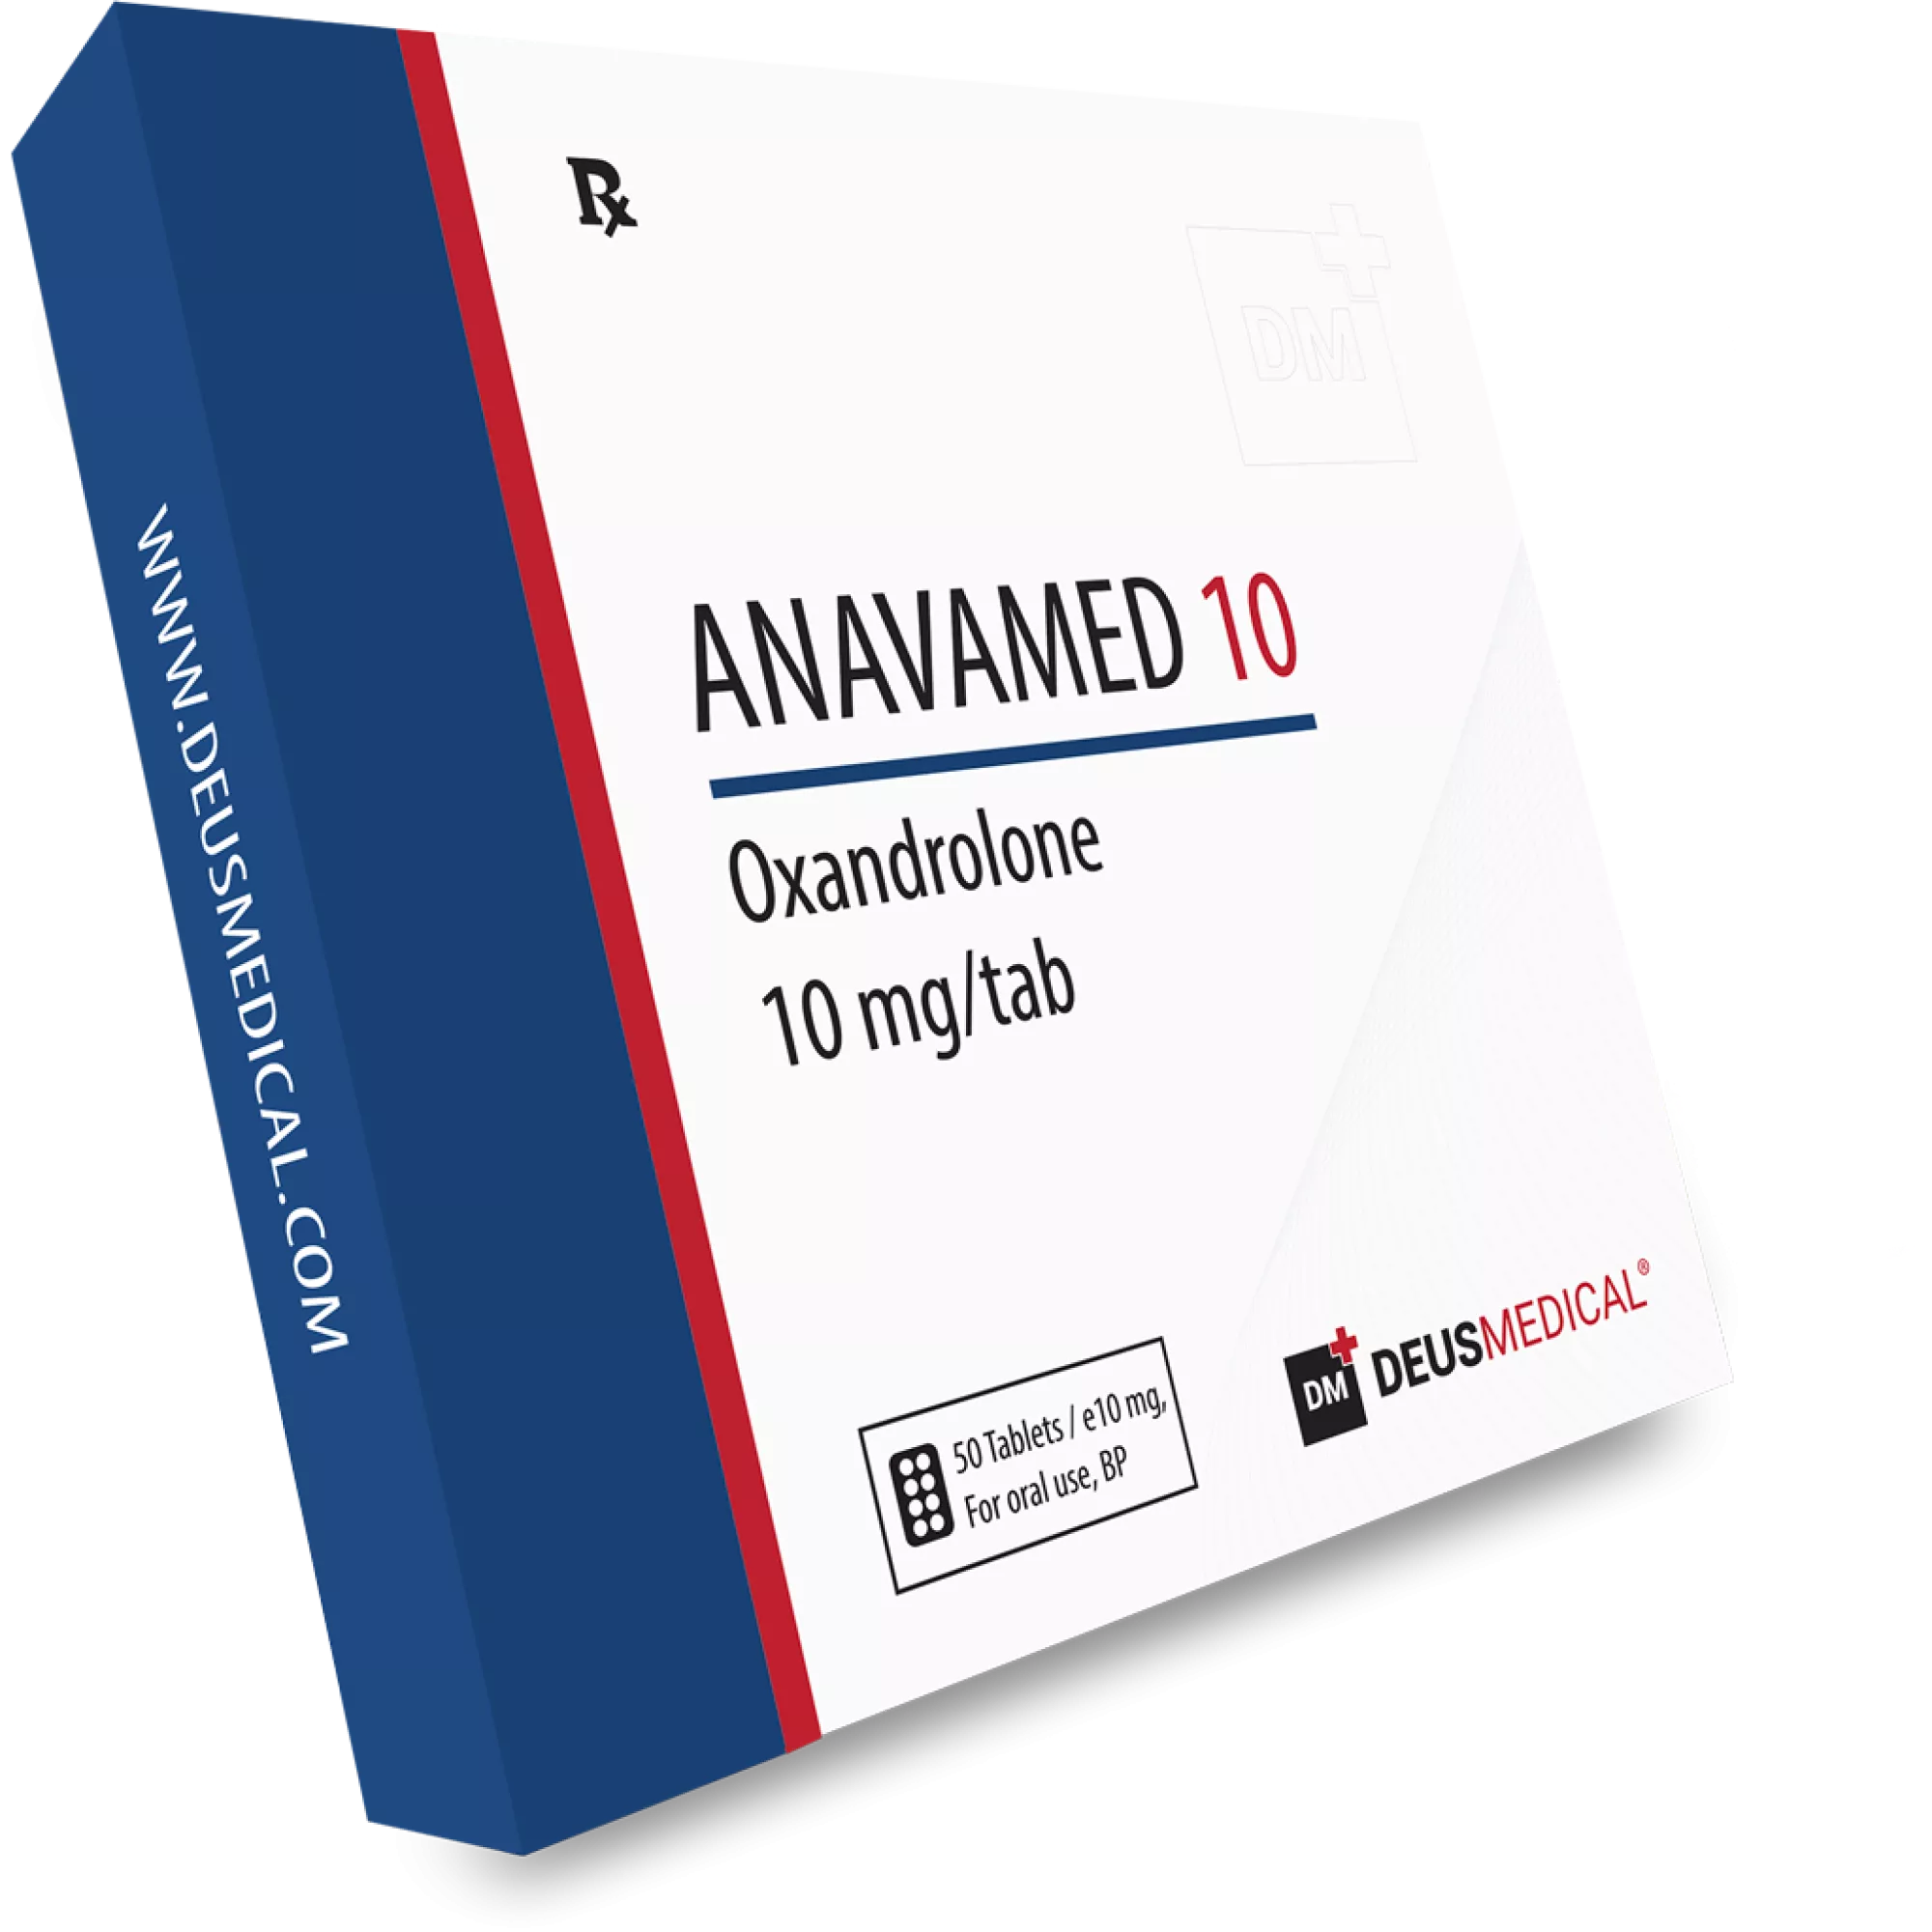 ANAVAMED 10 (Oxandrolone), Deus Medical, Buy Steroids Online - www.deuspower.shop